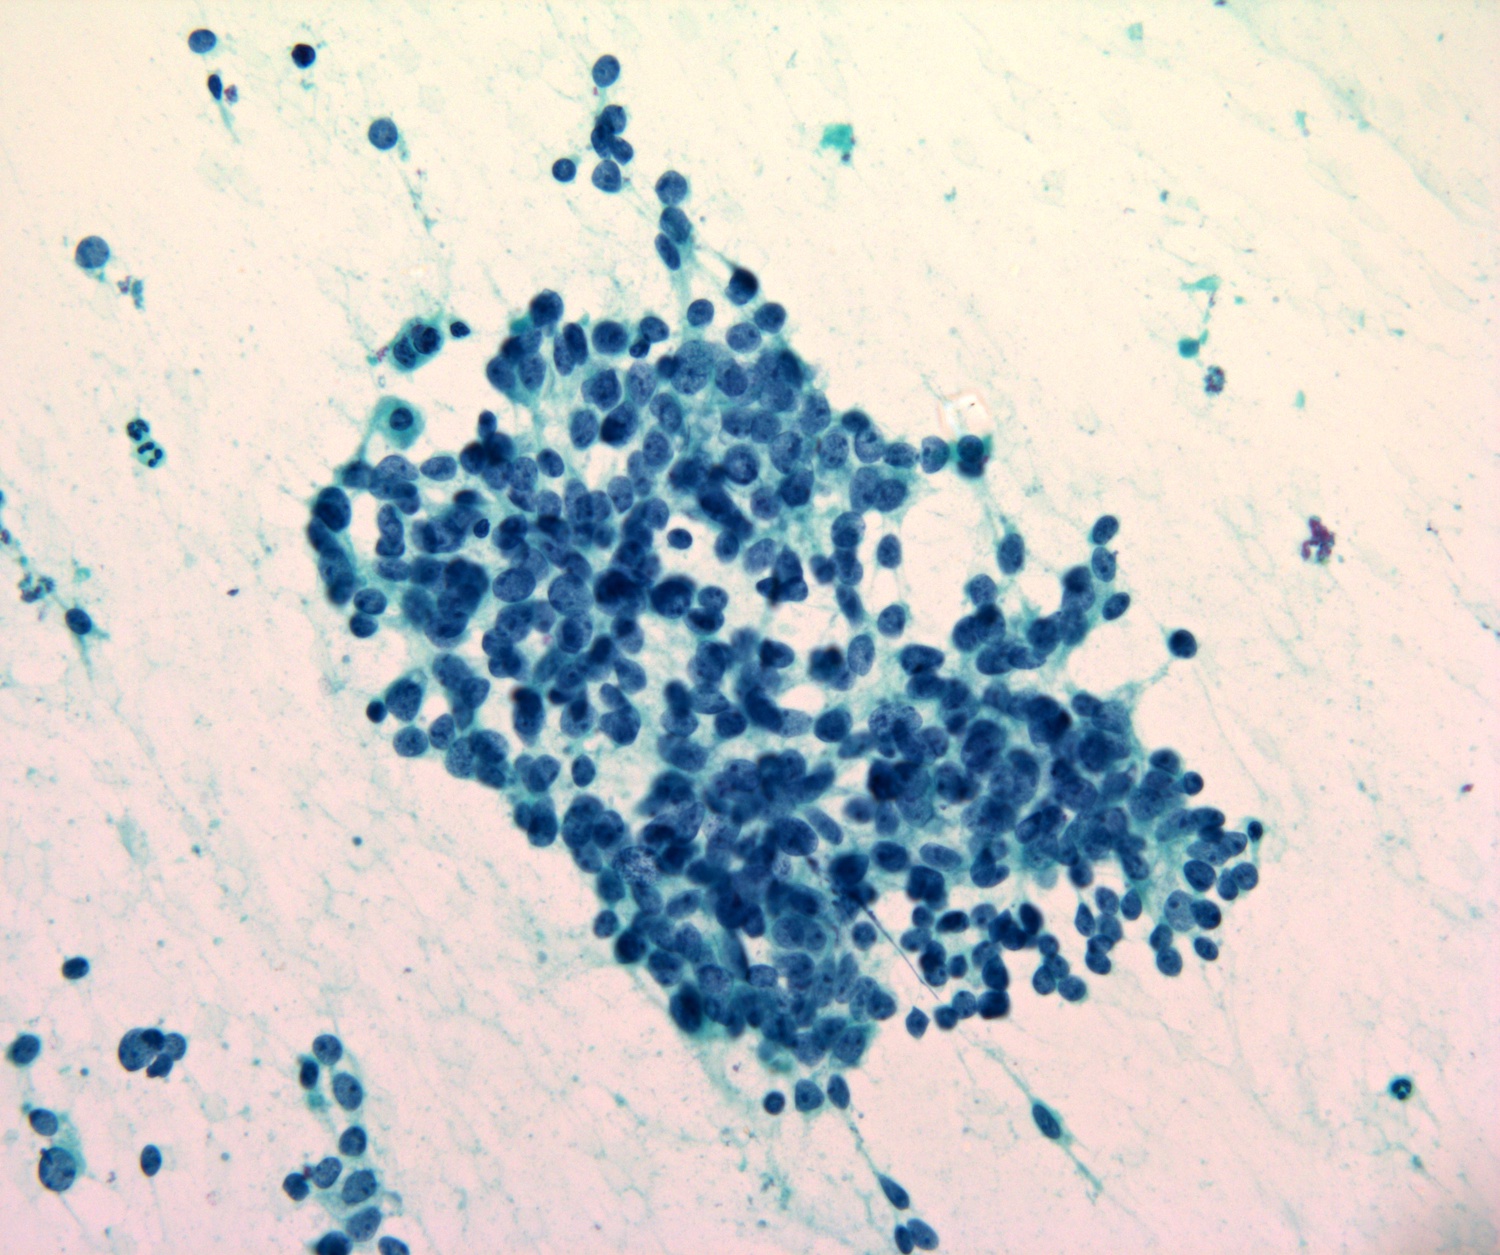 Suspicious for high grade basal cell adenocarcinoma